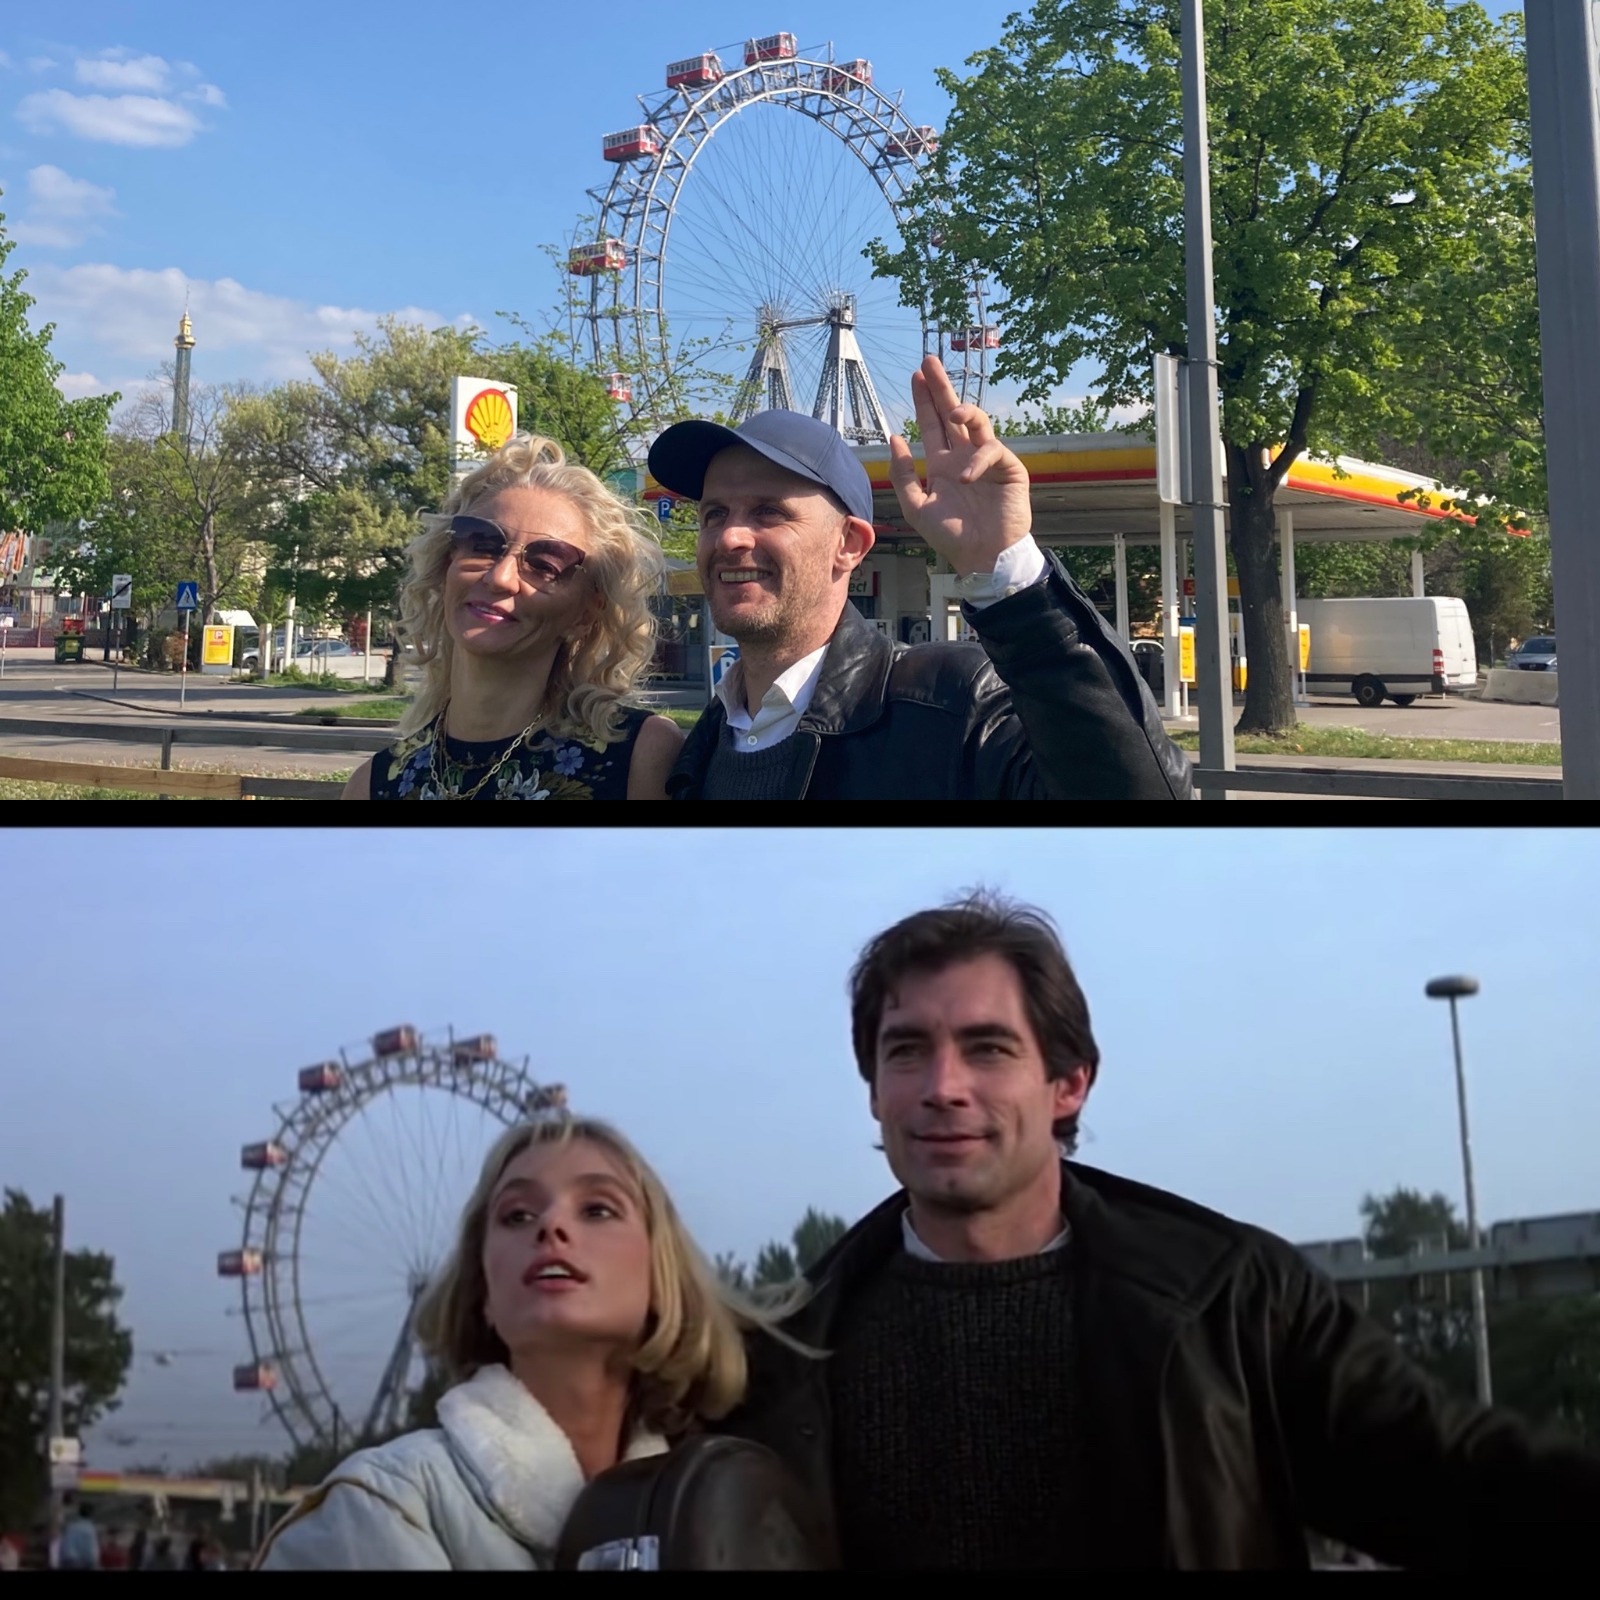 The Living Daylights Ferris Wheel in Vienna